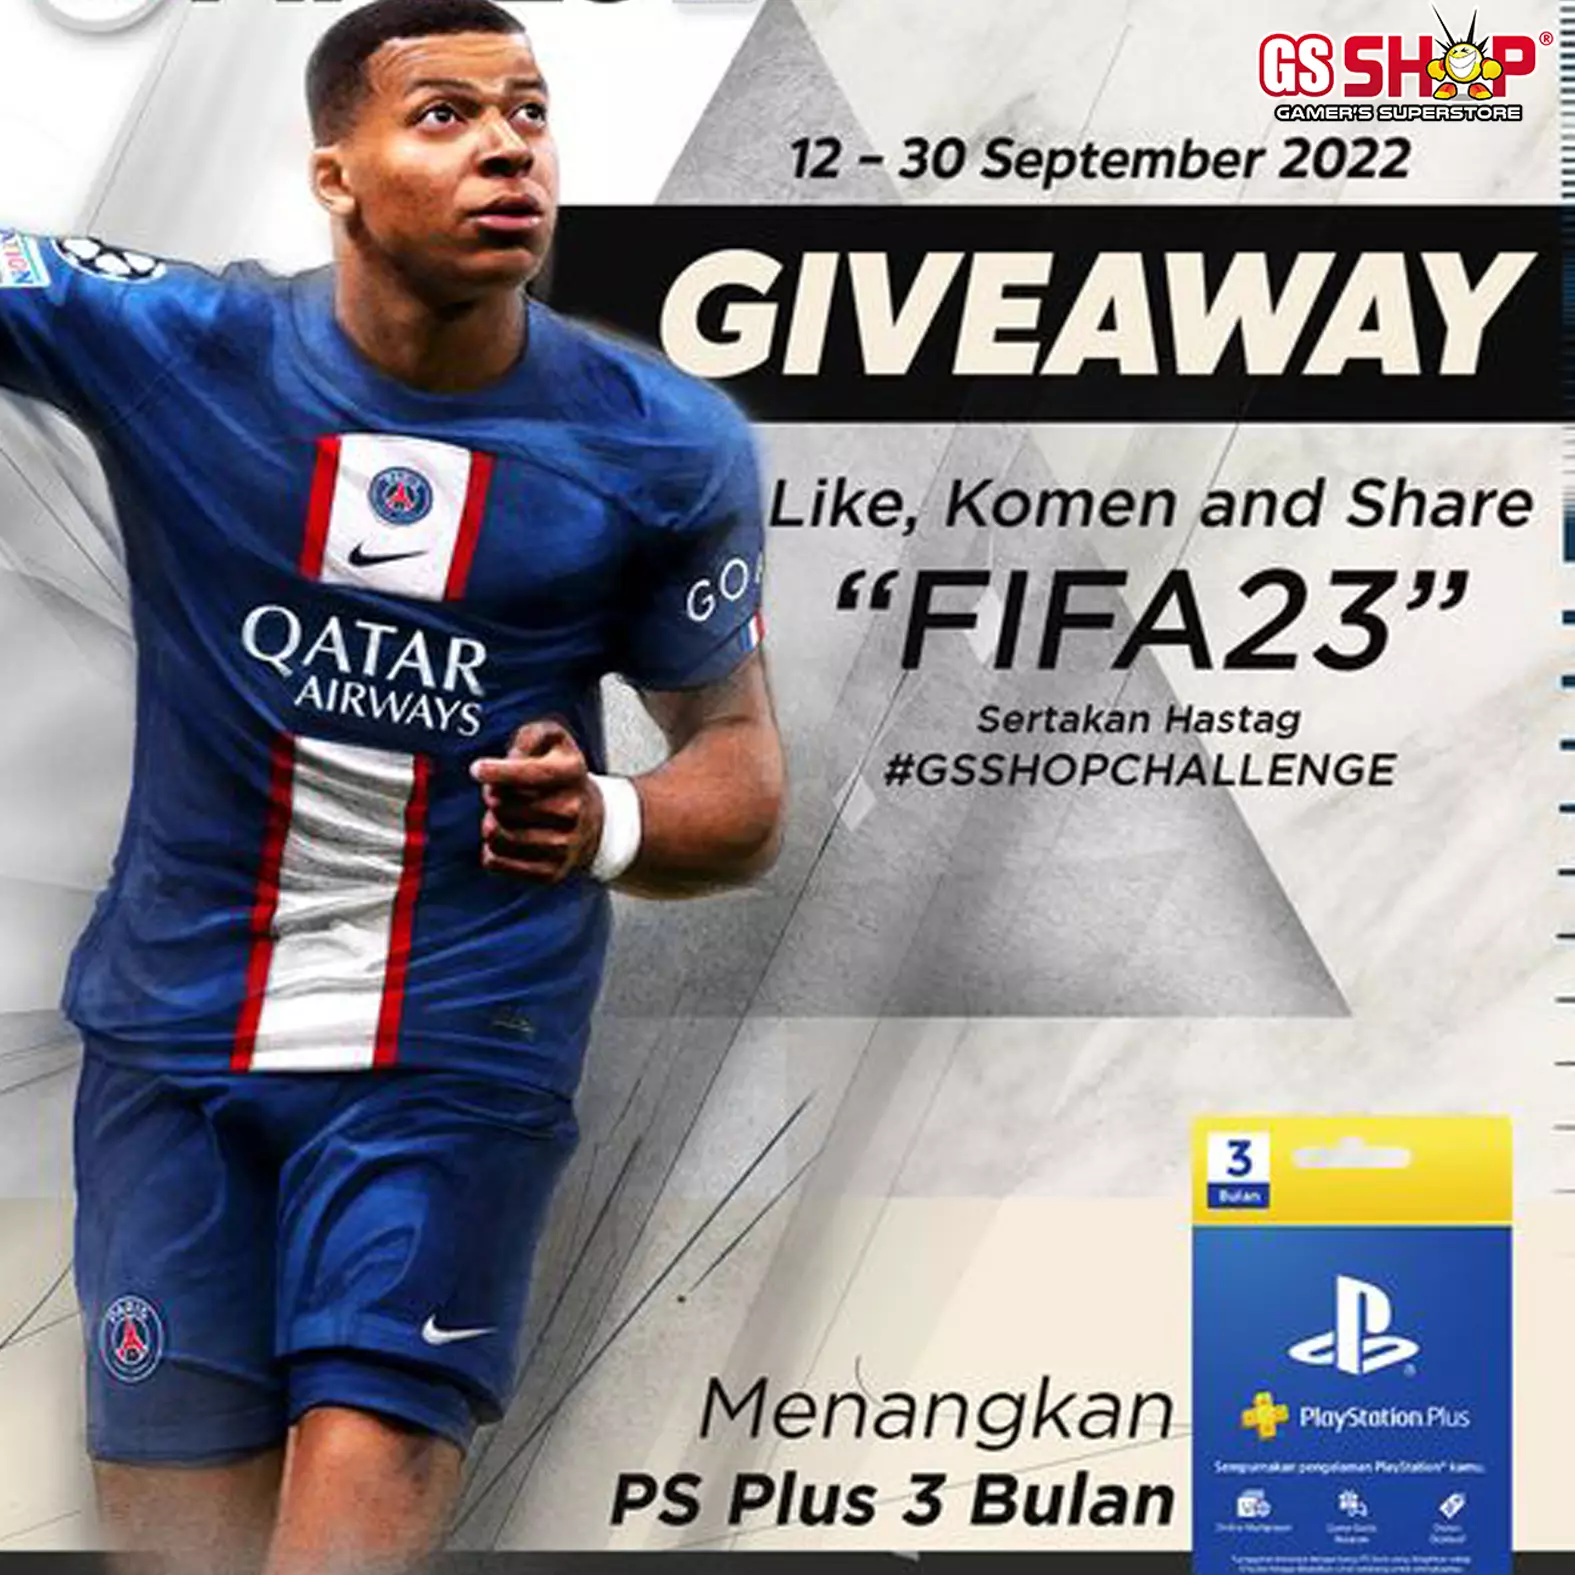 GSSHOP FIFA 23 Giveaway